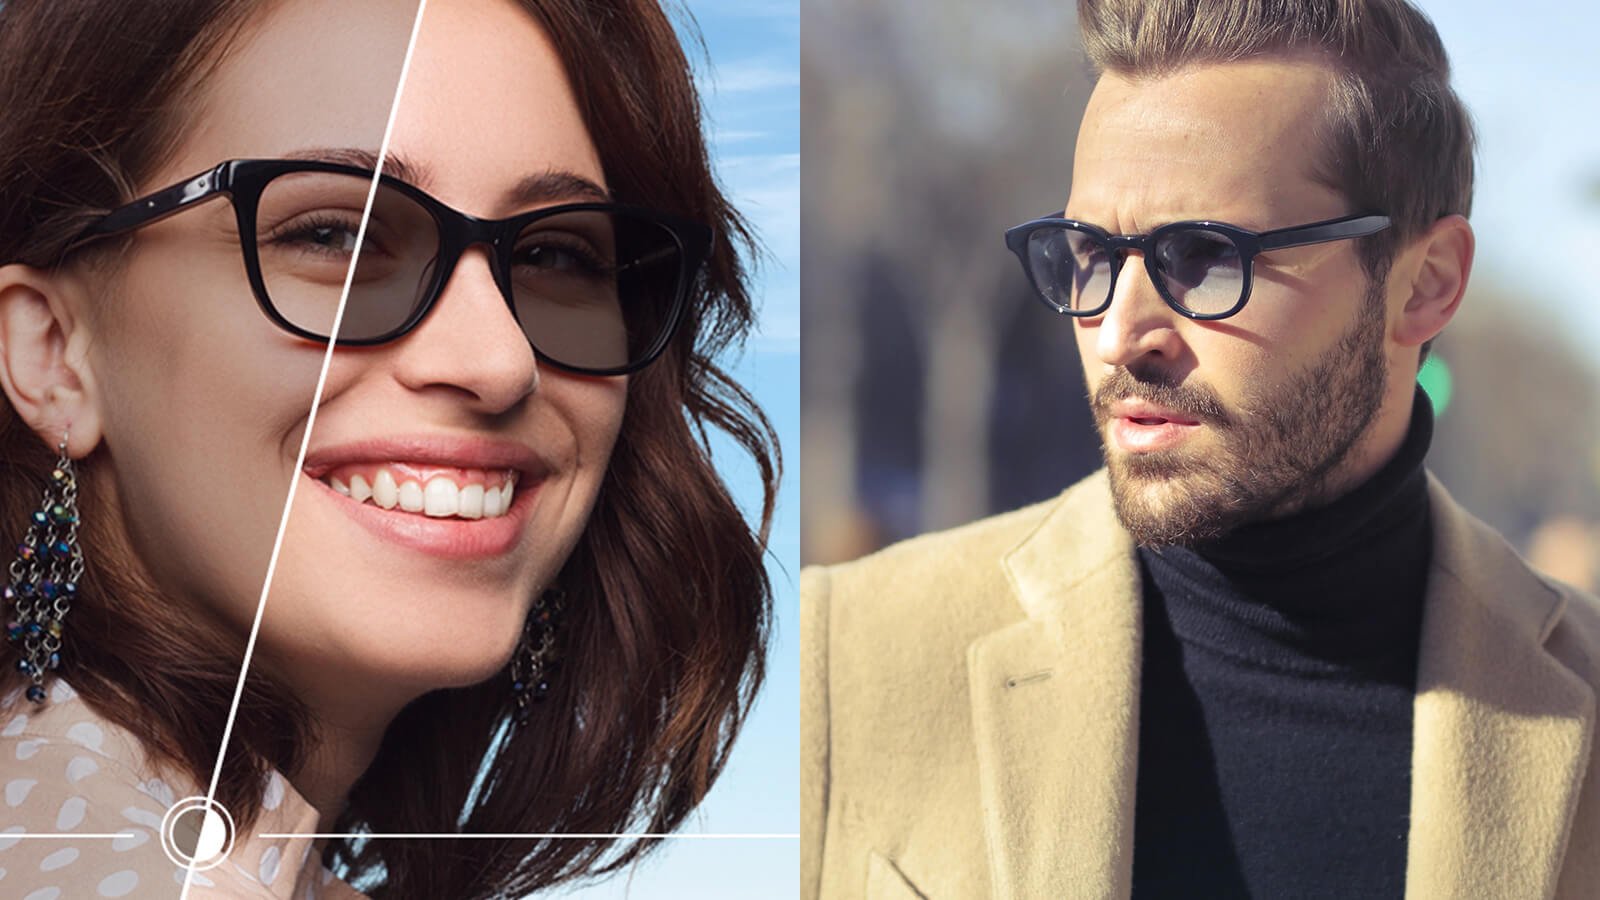 Are prescription sunglasses better than Transition lenses?